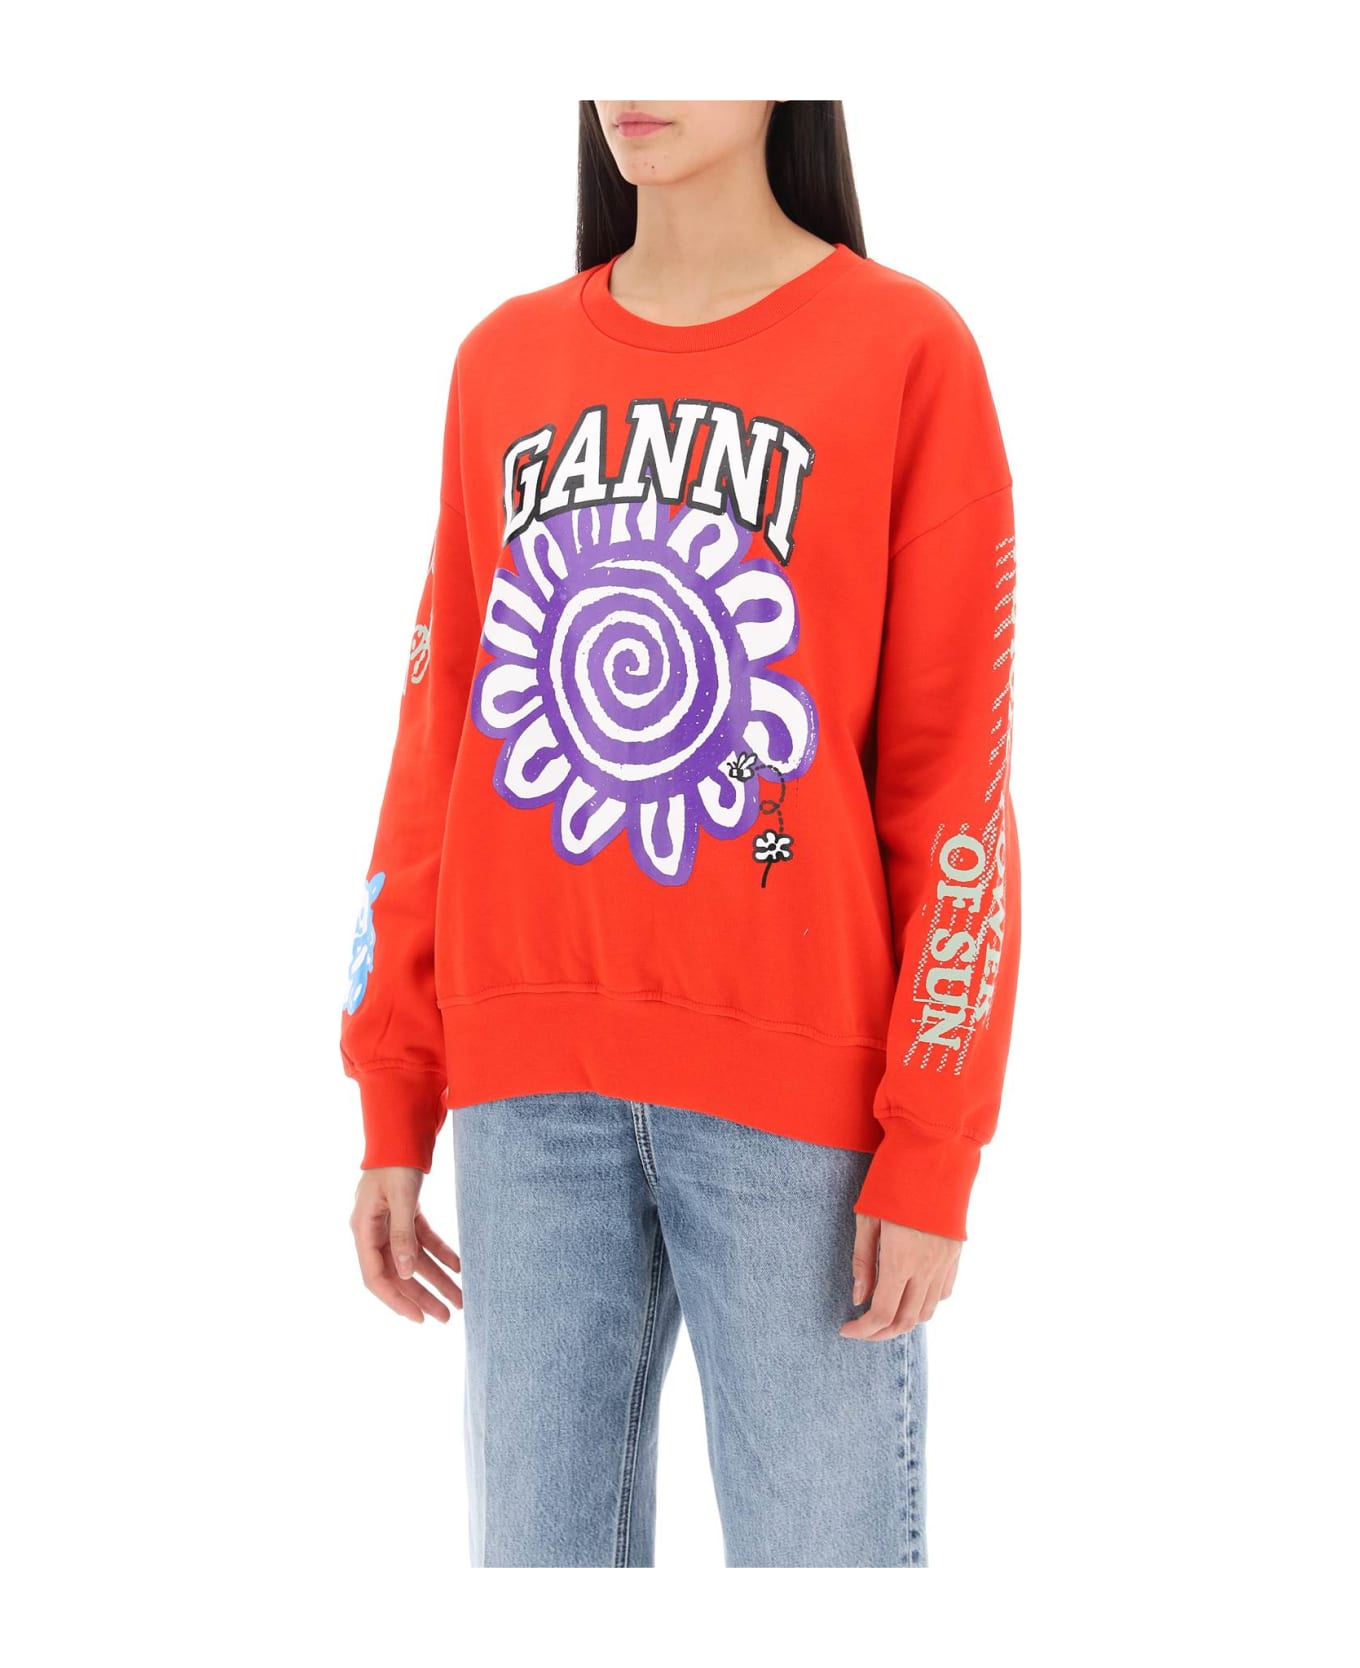 Ganni Sweatshirt With Graphic Prints - Orange